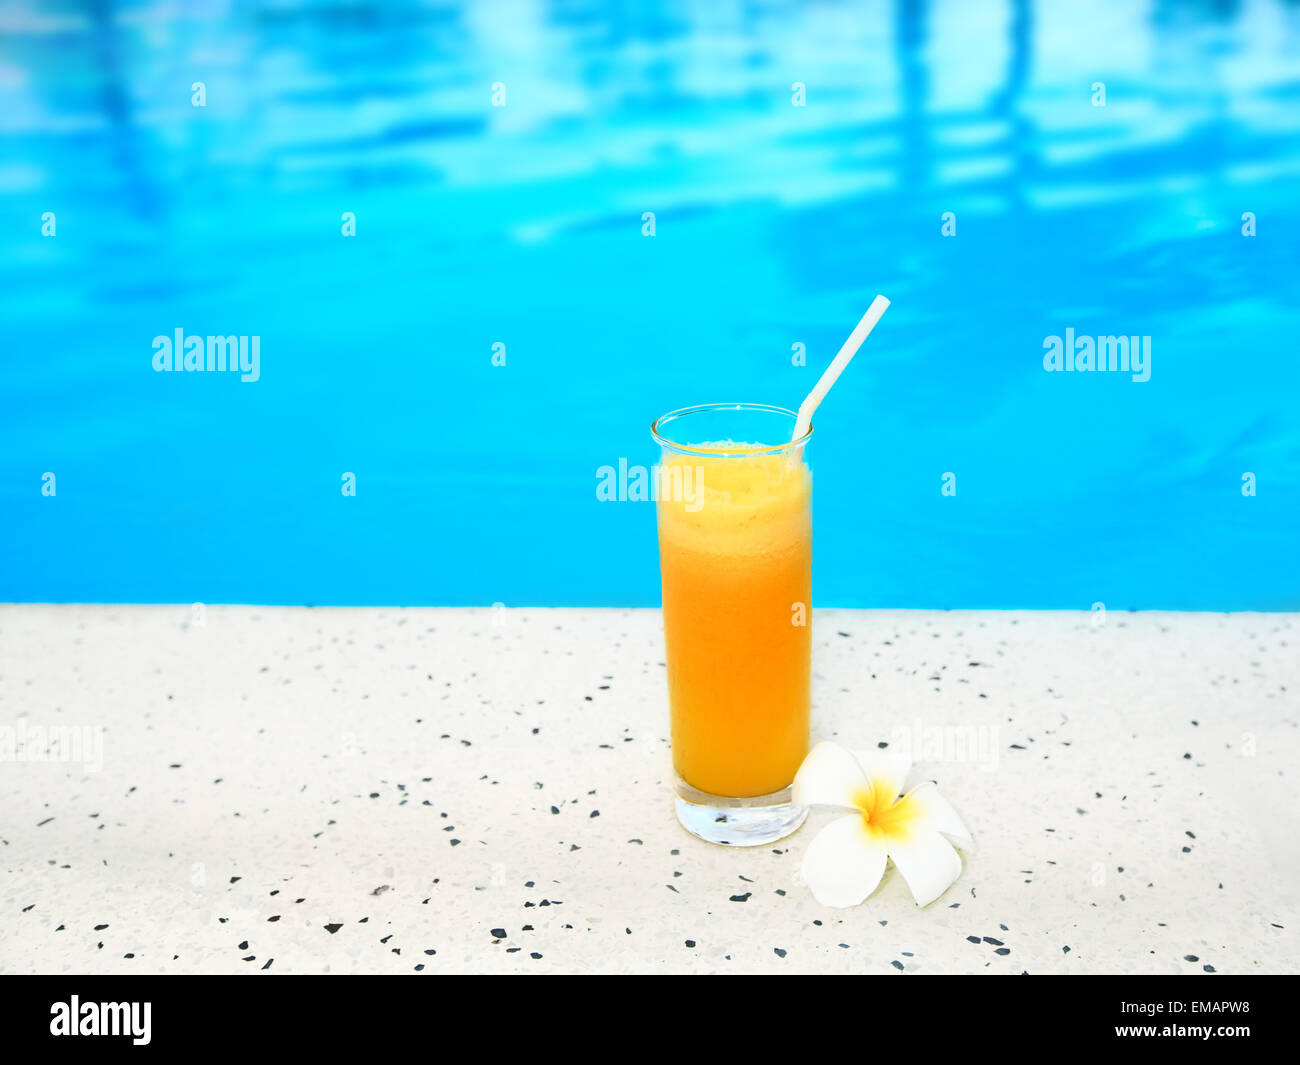 https://c8.alamy.com/comp/EMAPW8/glass-of-juice-on-the-edge-of-swimming-pool-EMAPW8.jpg